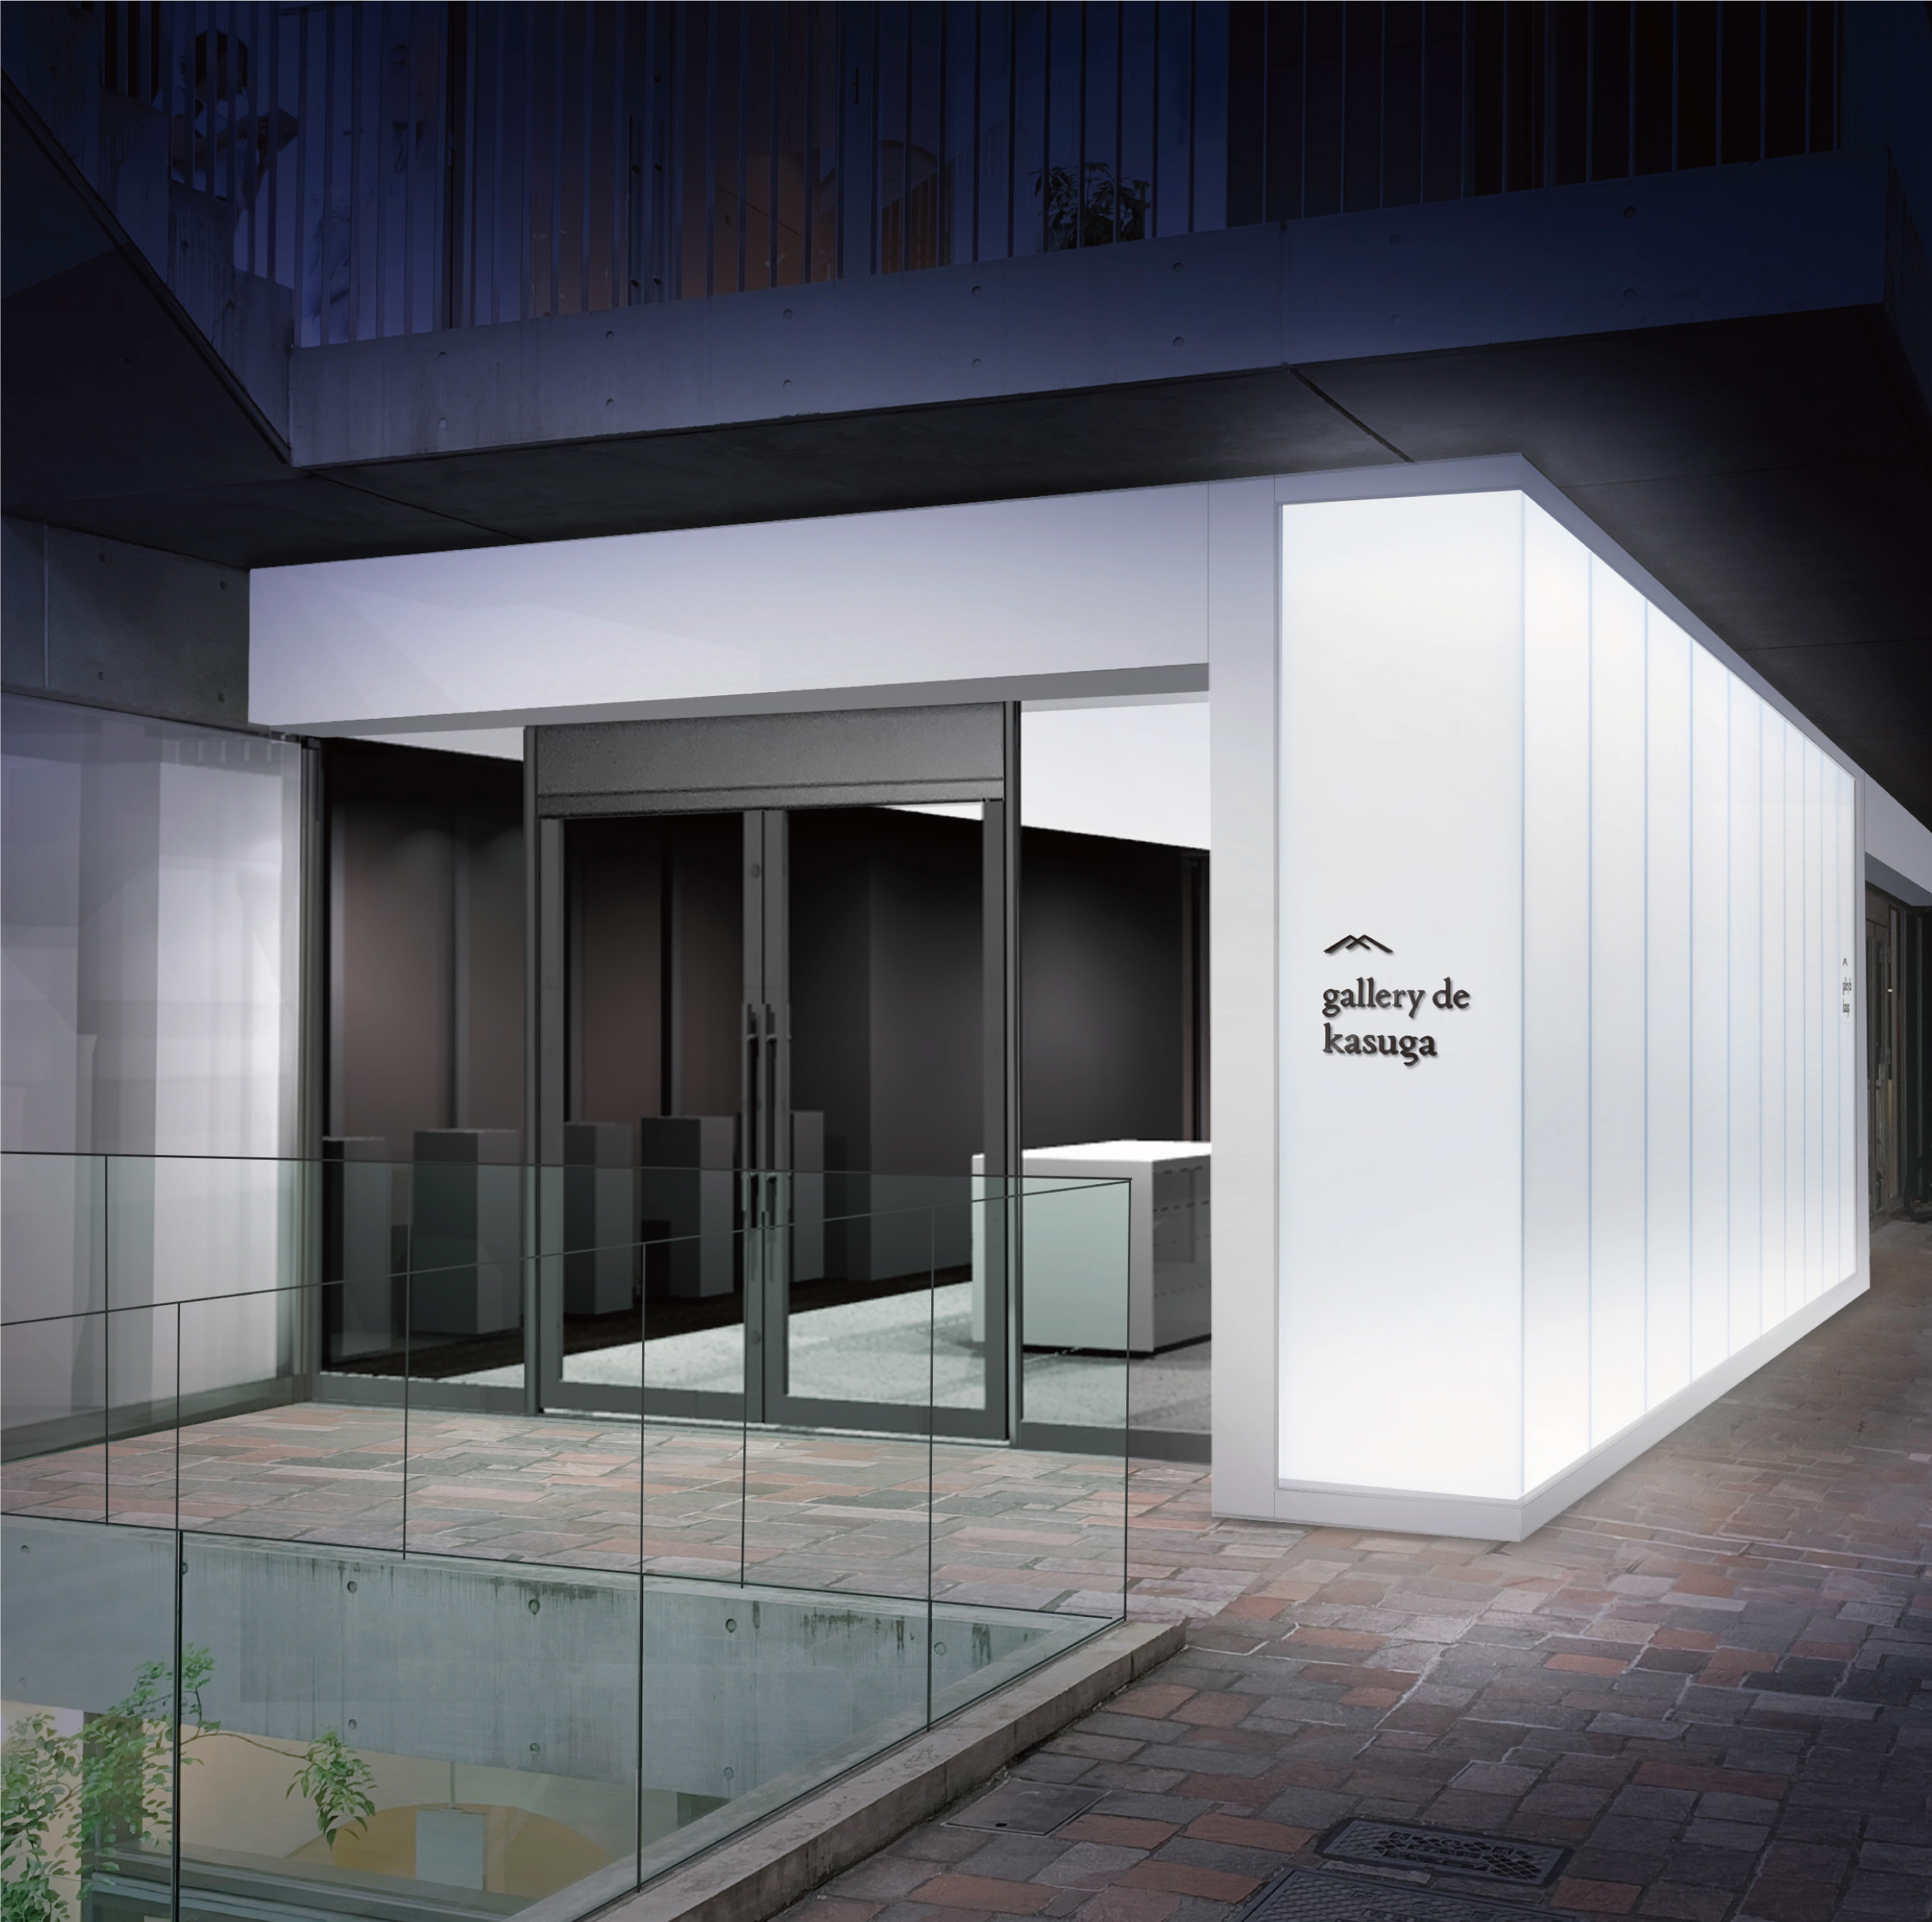 Science To Art を発信する複合商業施設 Gallery De Kasuga が11月16 土 東京 表参道にオープン 株式会社 Hide Kasuga 16のプレスリリース